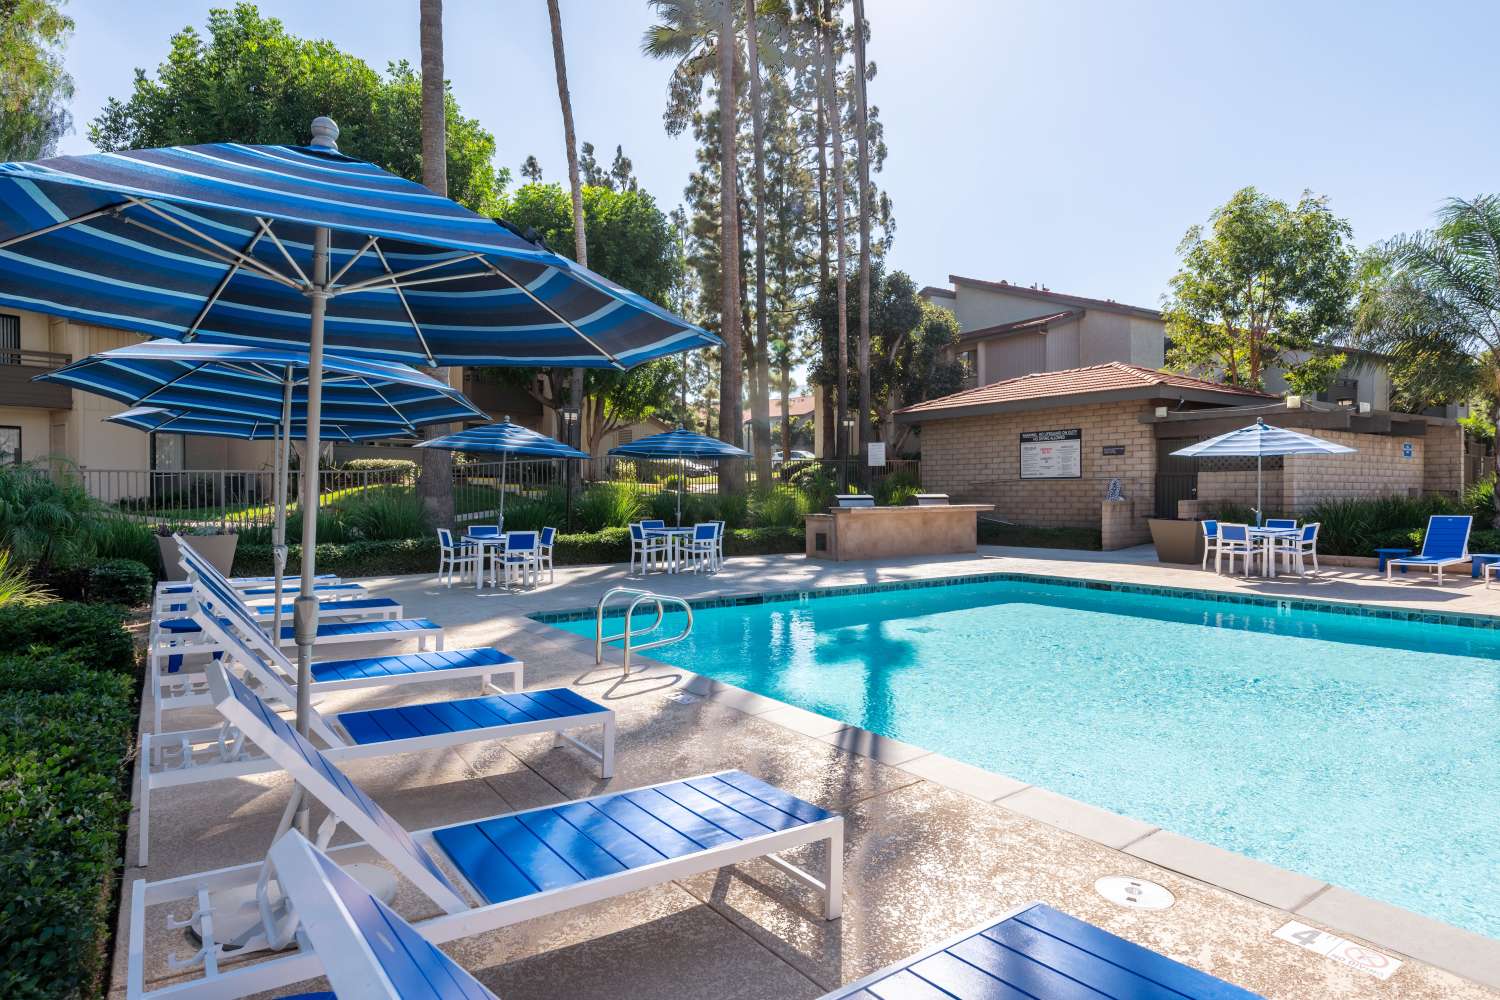 Giant swimming pool at Parcwood Apartments in Corona, California